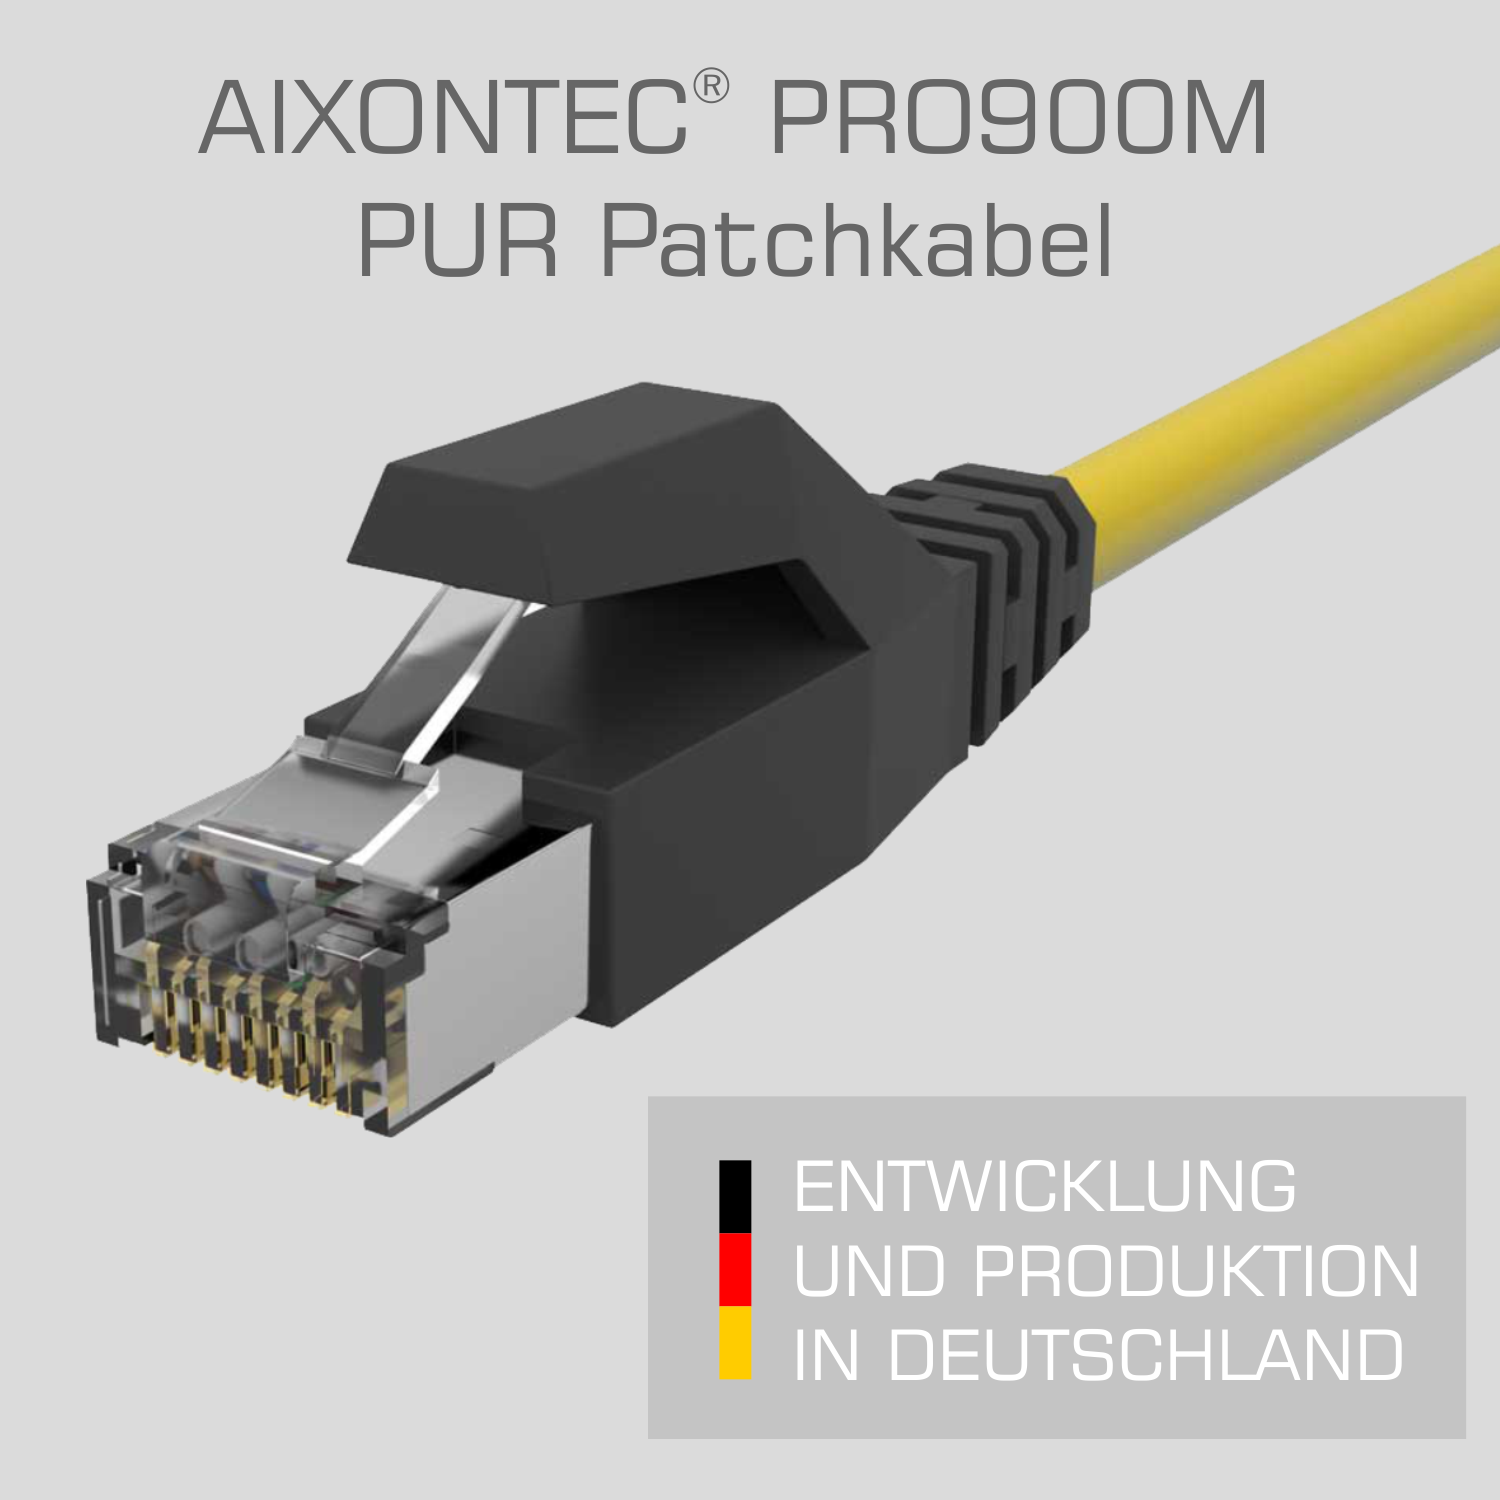 AIXONTEC 6m UV-Beständig Ethernetkabel 10 Gigabit, RJ45 Netzwerkkabel, m Outdoor 6,0 Lankabel